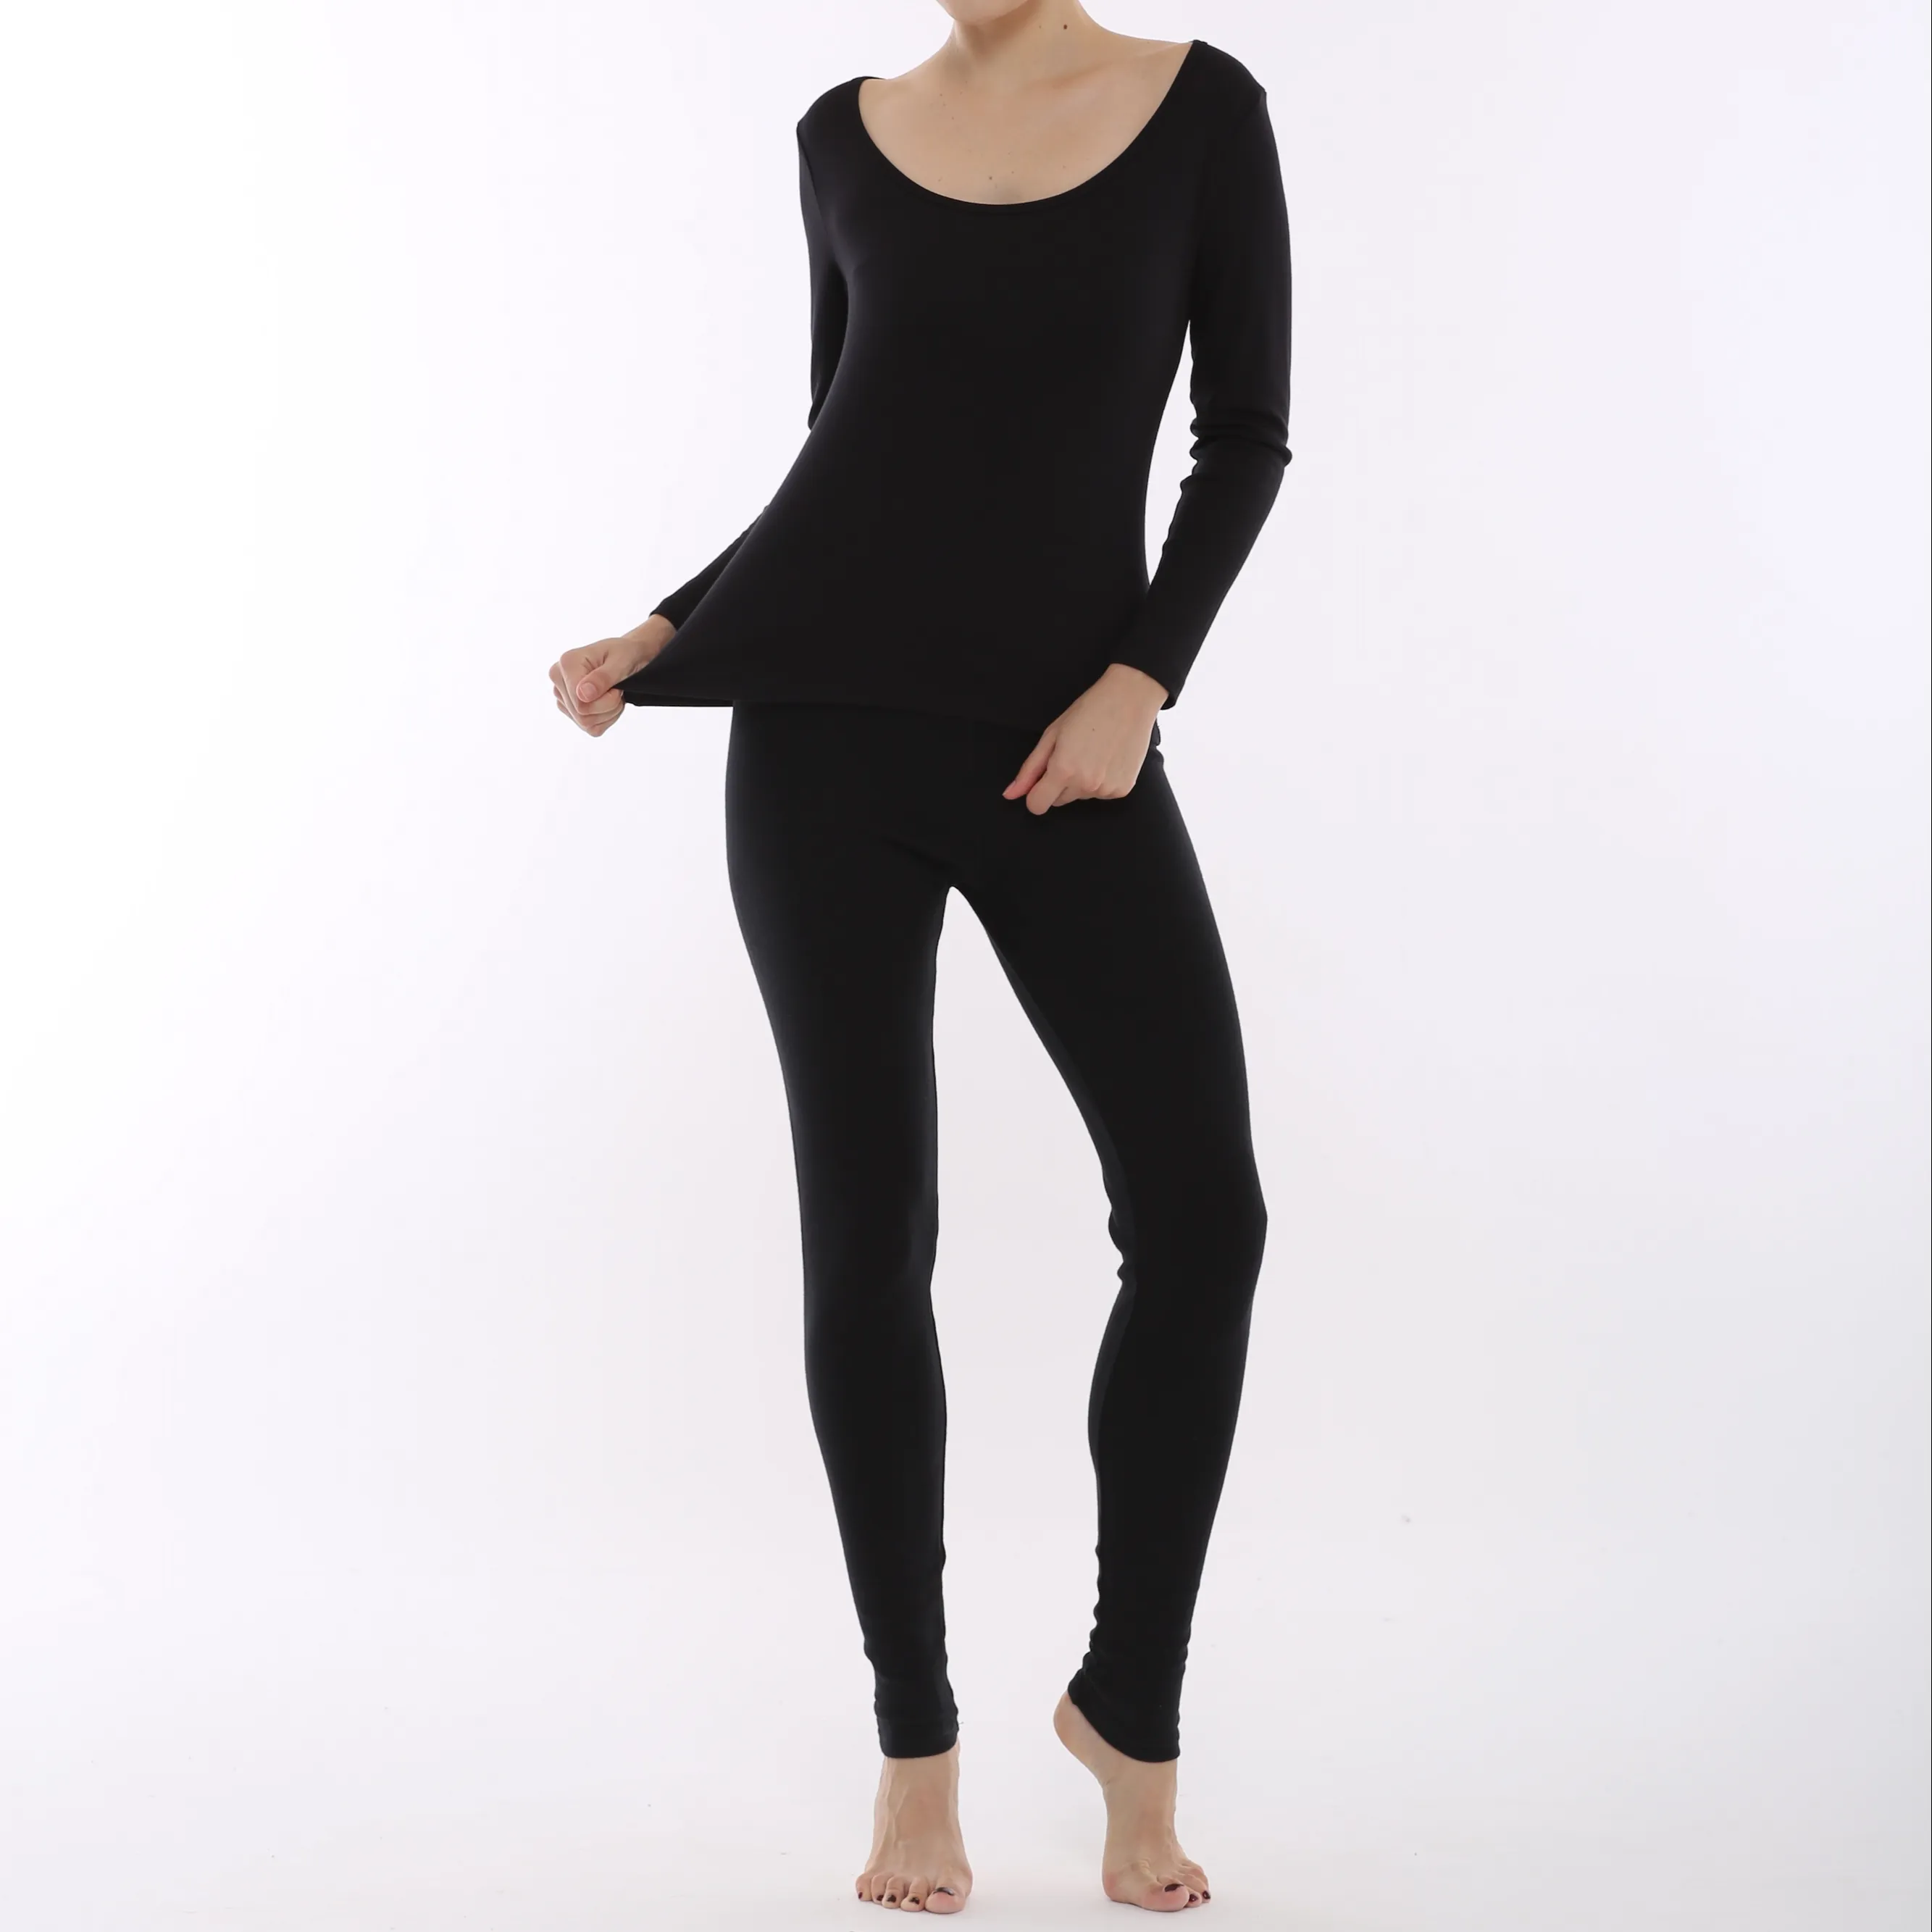 Fashion Soft Cozy Long Sleeve Shirts Underwear Set Lingerie Long Johns Set Women RC Fiber & Spandex Black